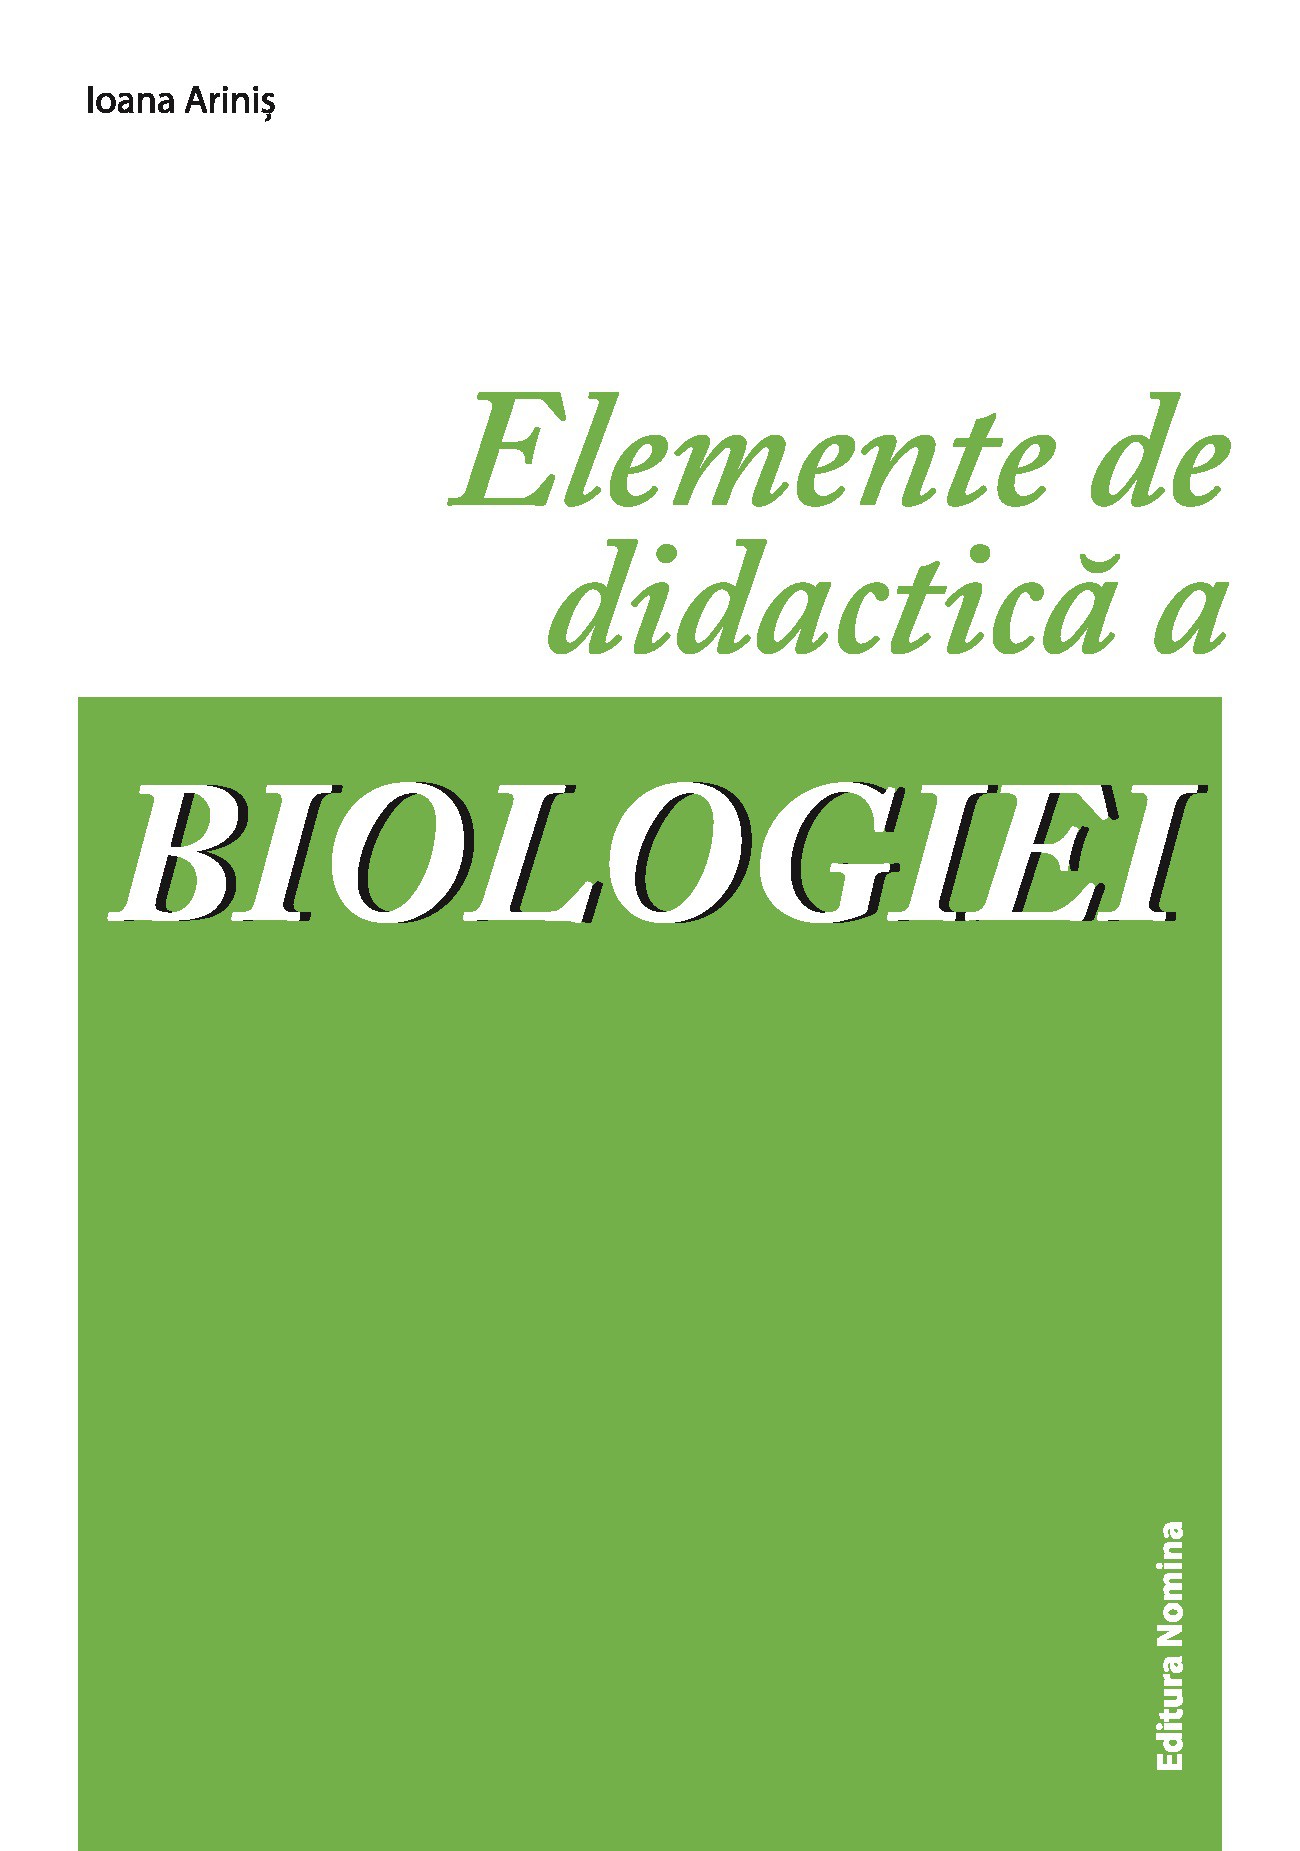 Elemente de didactica a Biologiei - Ioana Arinis